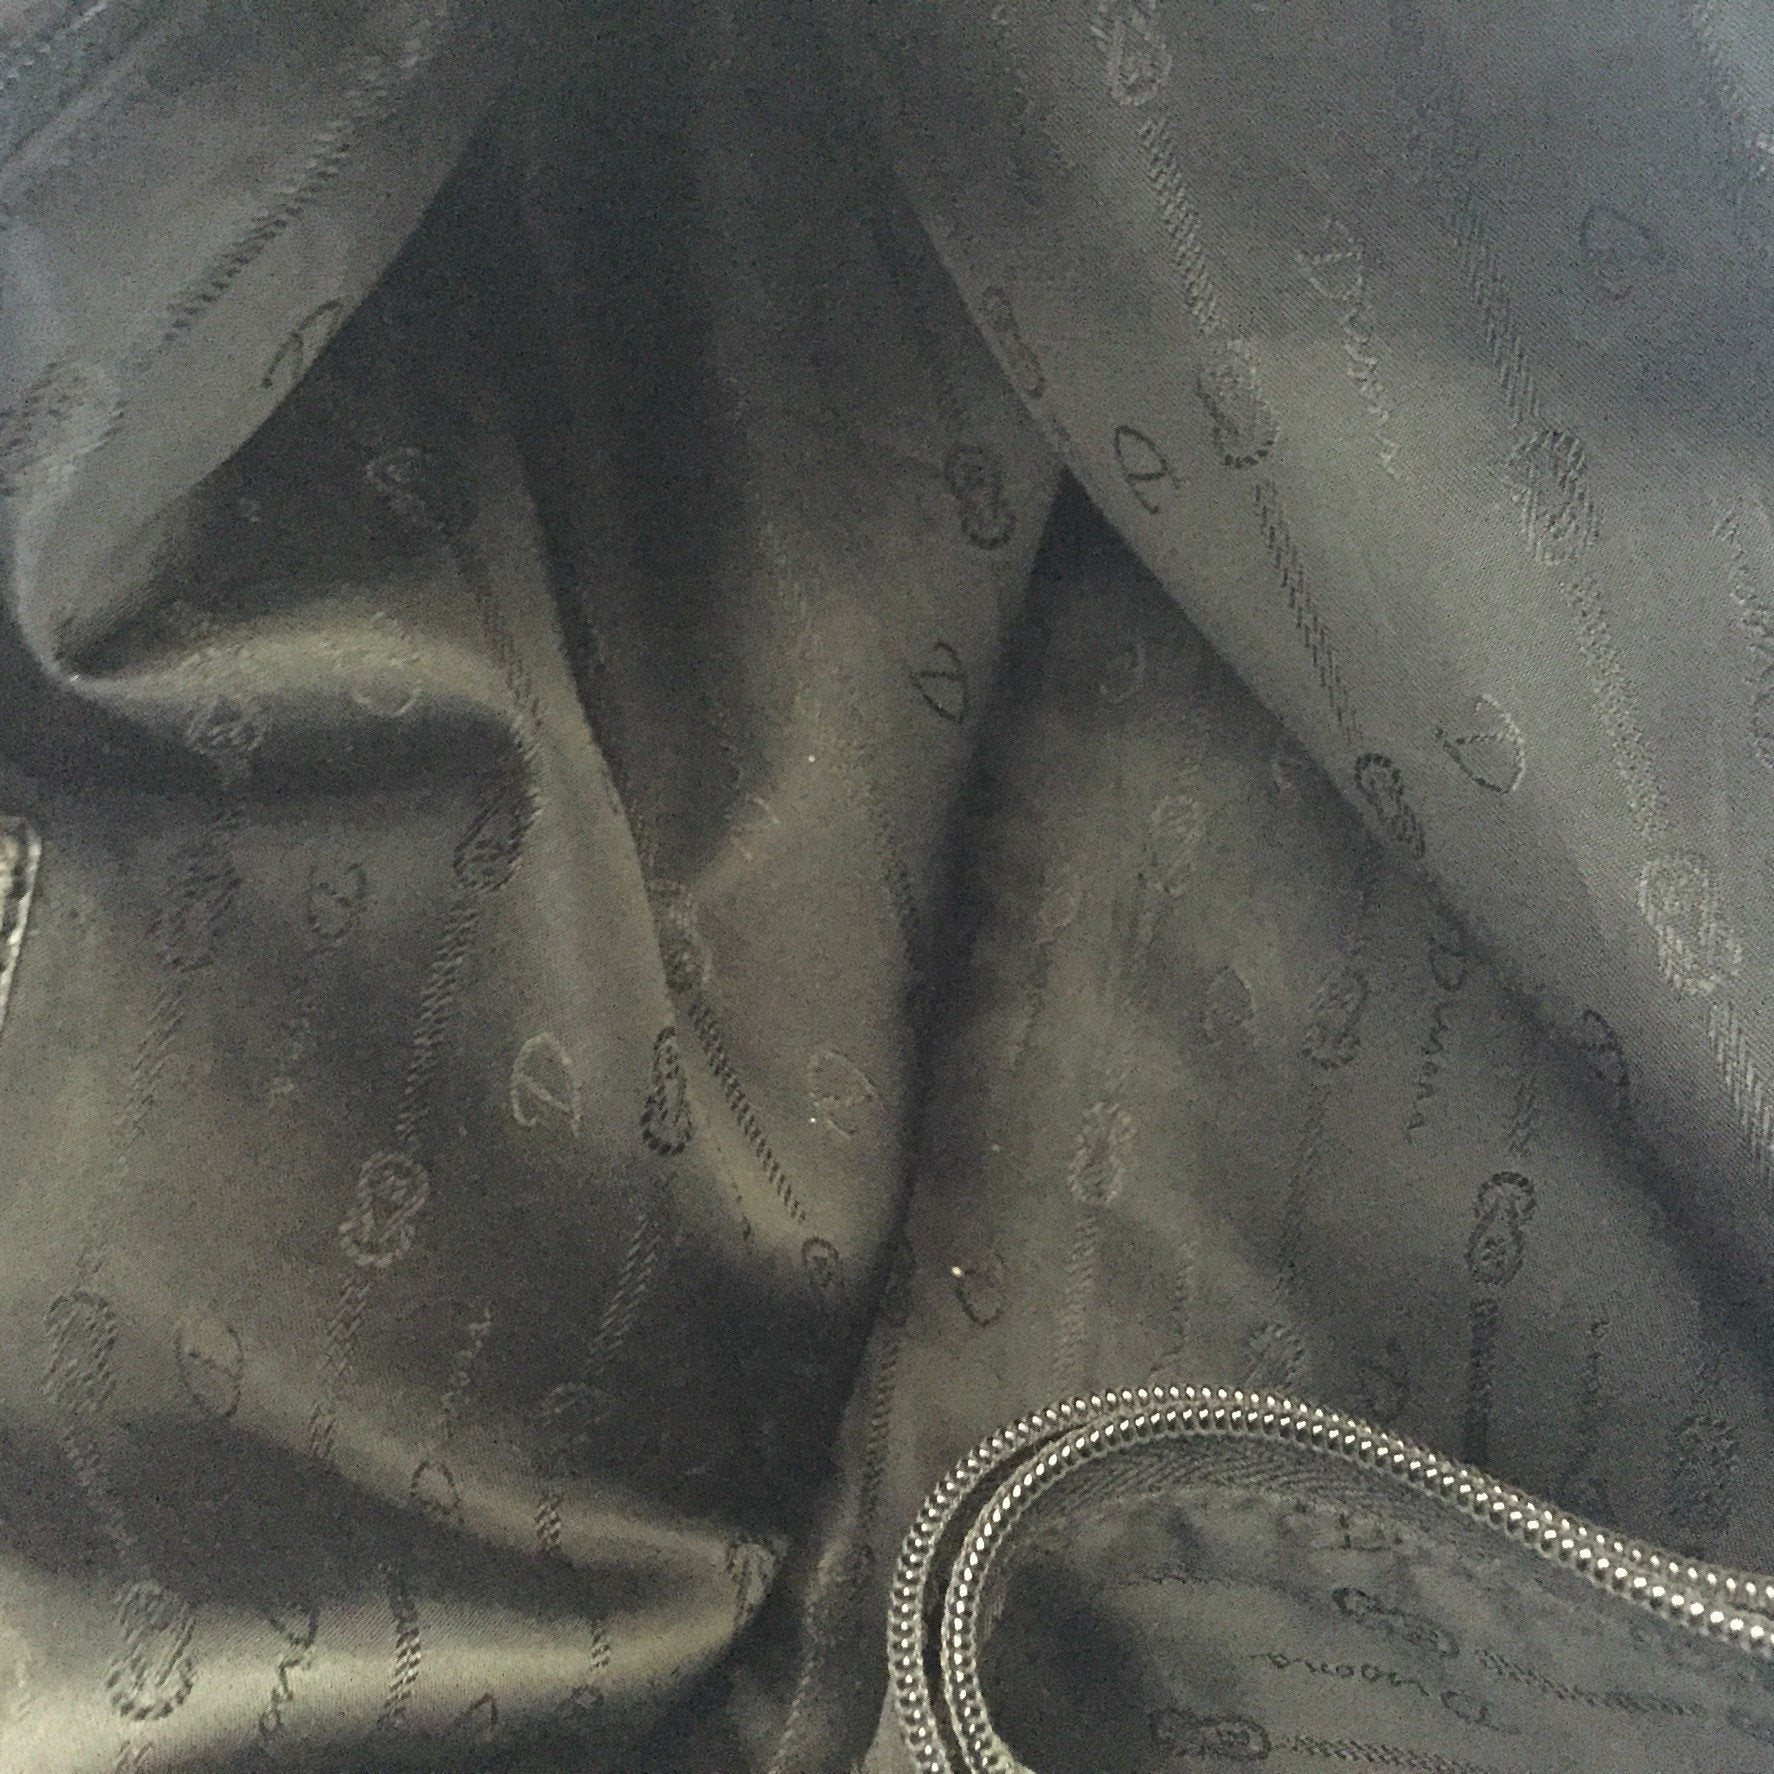 Dissona Italian Designer Gray Leather Bag – FABULUX